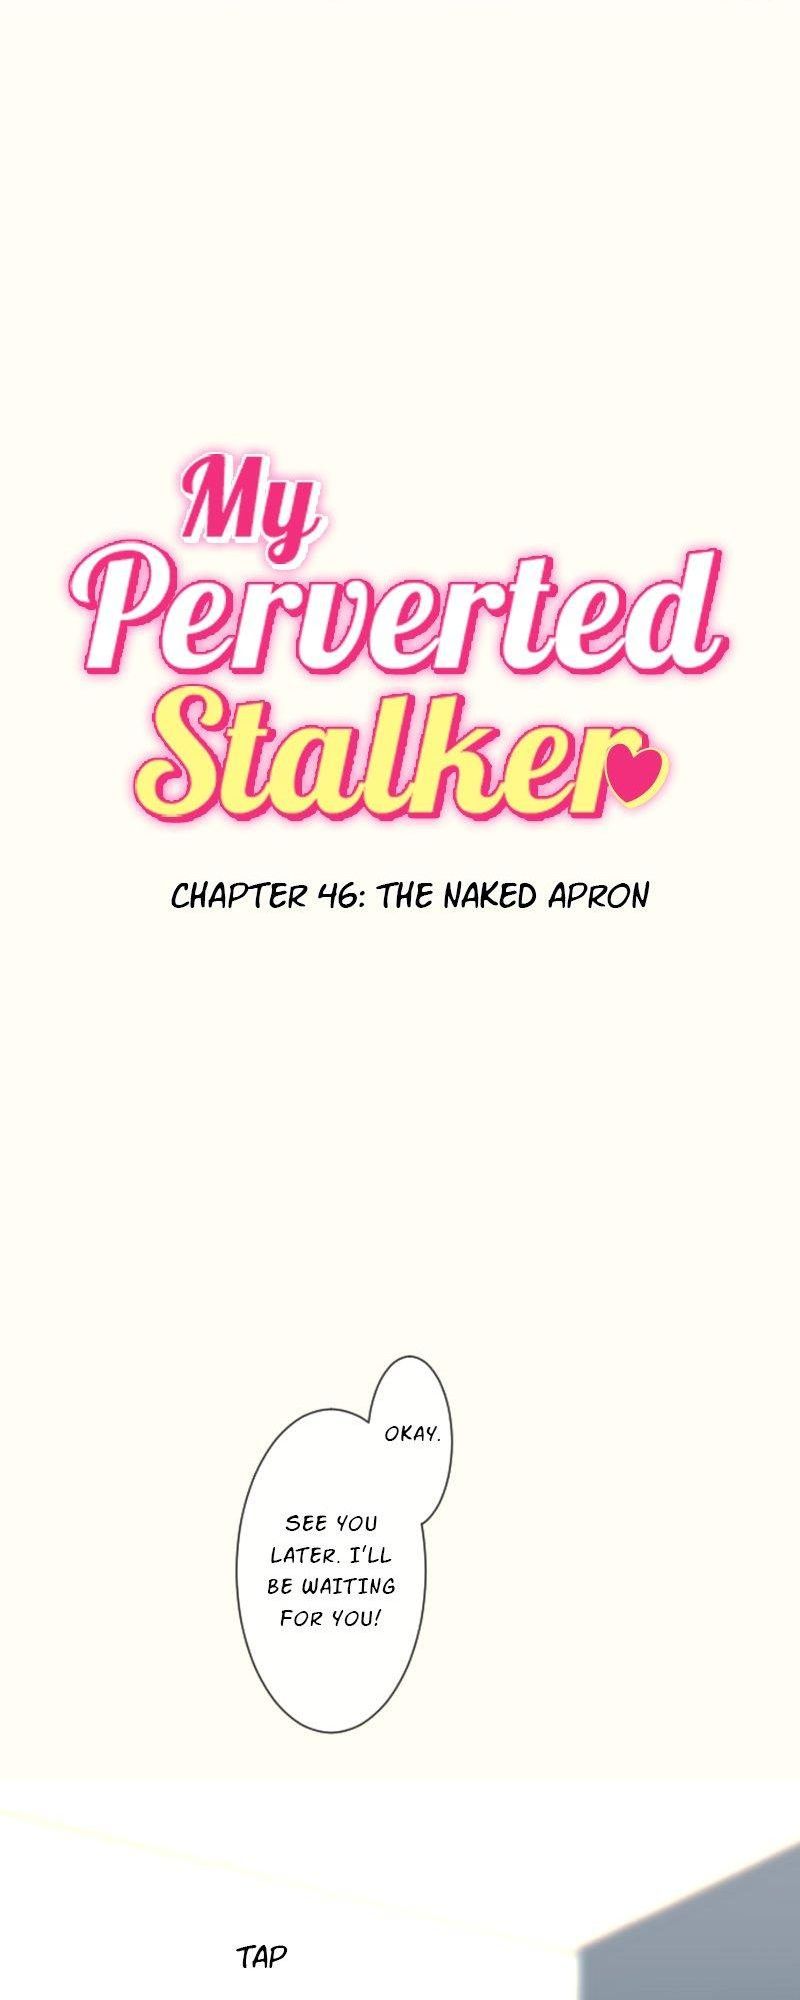 My Perverted Stalker - Page 1